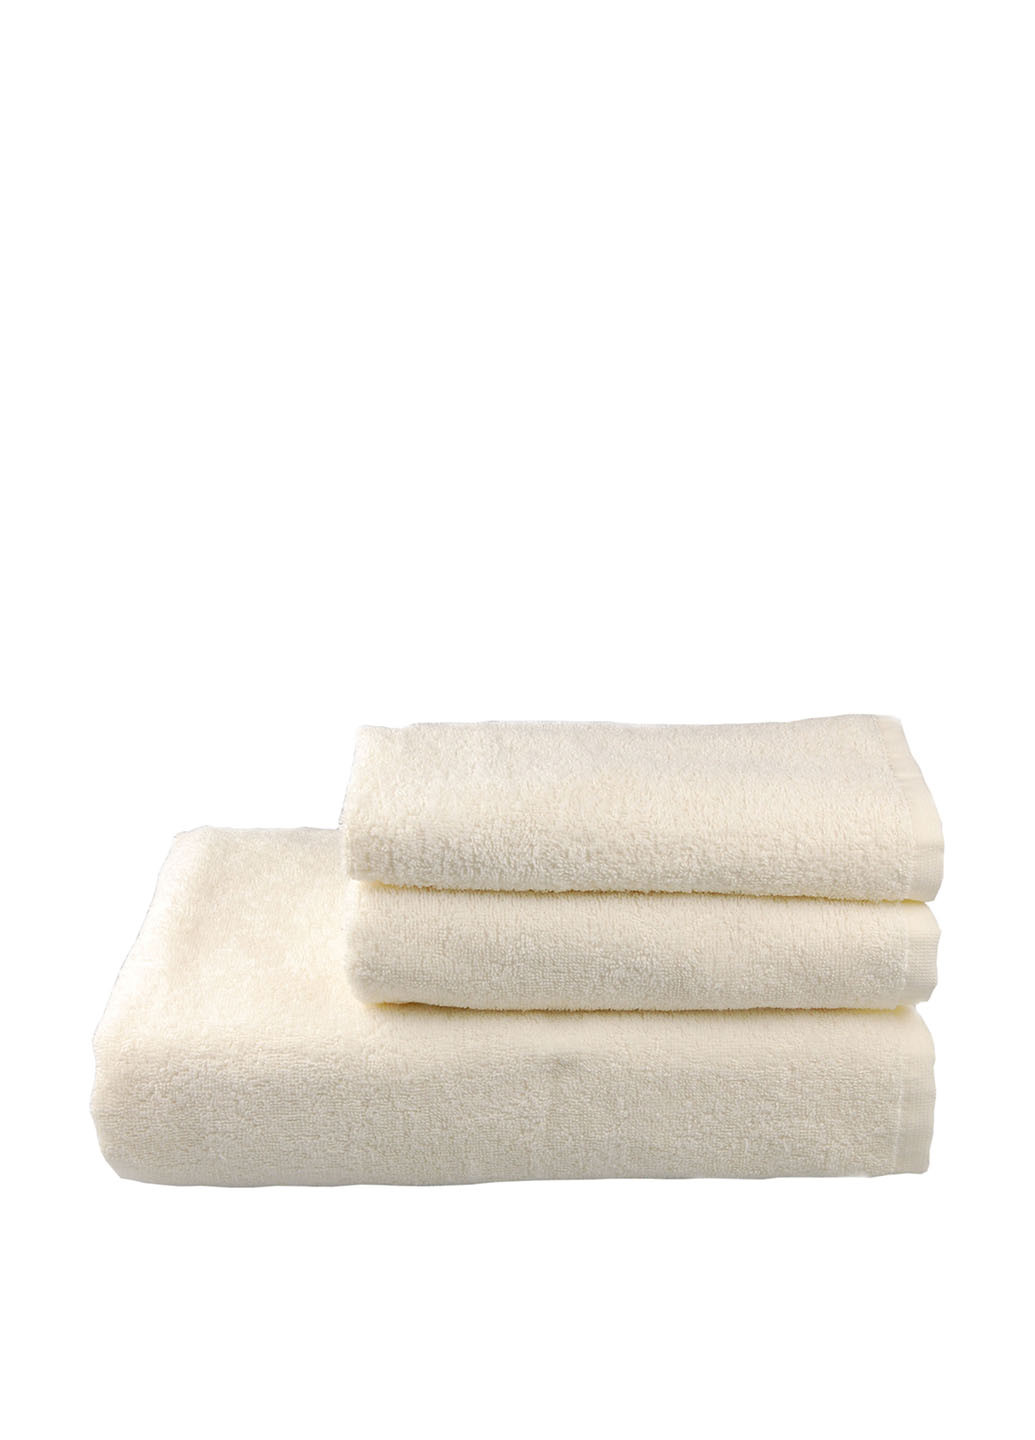 No Brand полотенце, 70х140 см однотонный кремовый производство - Туркменистан